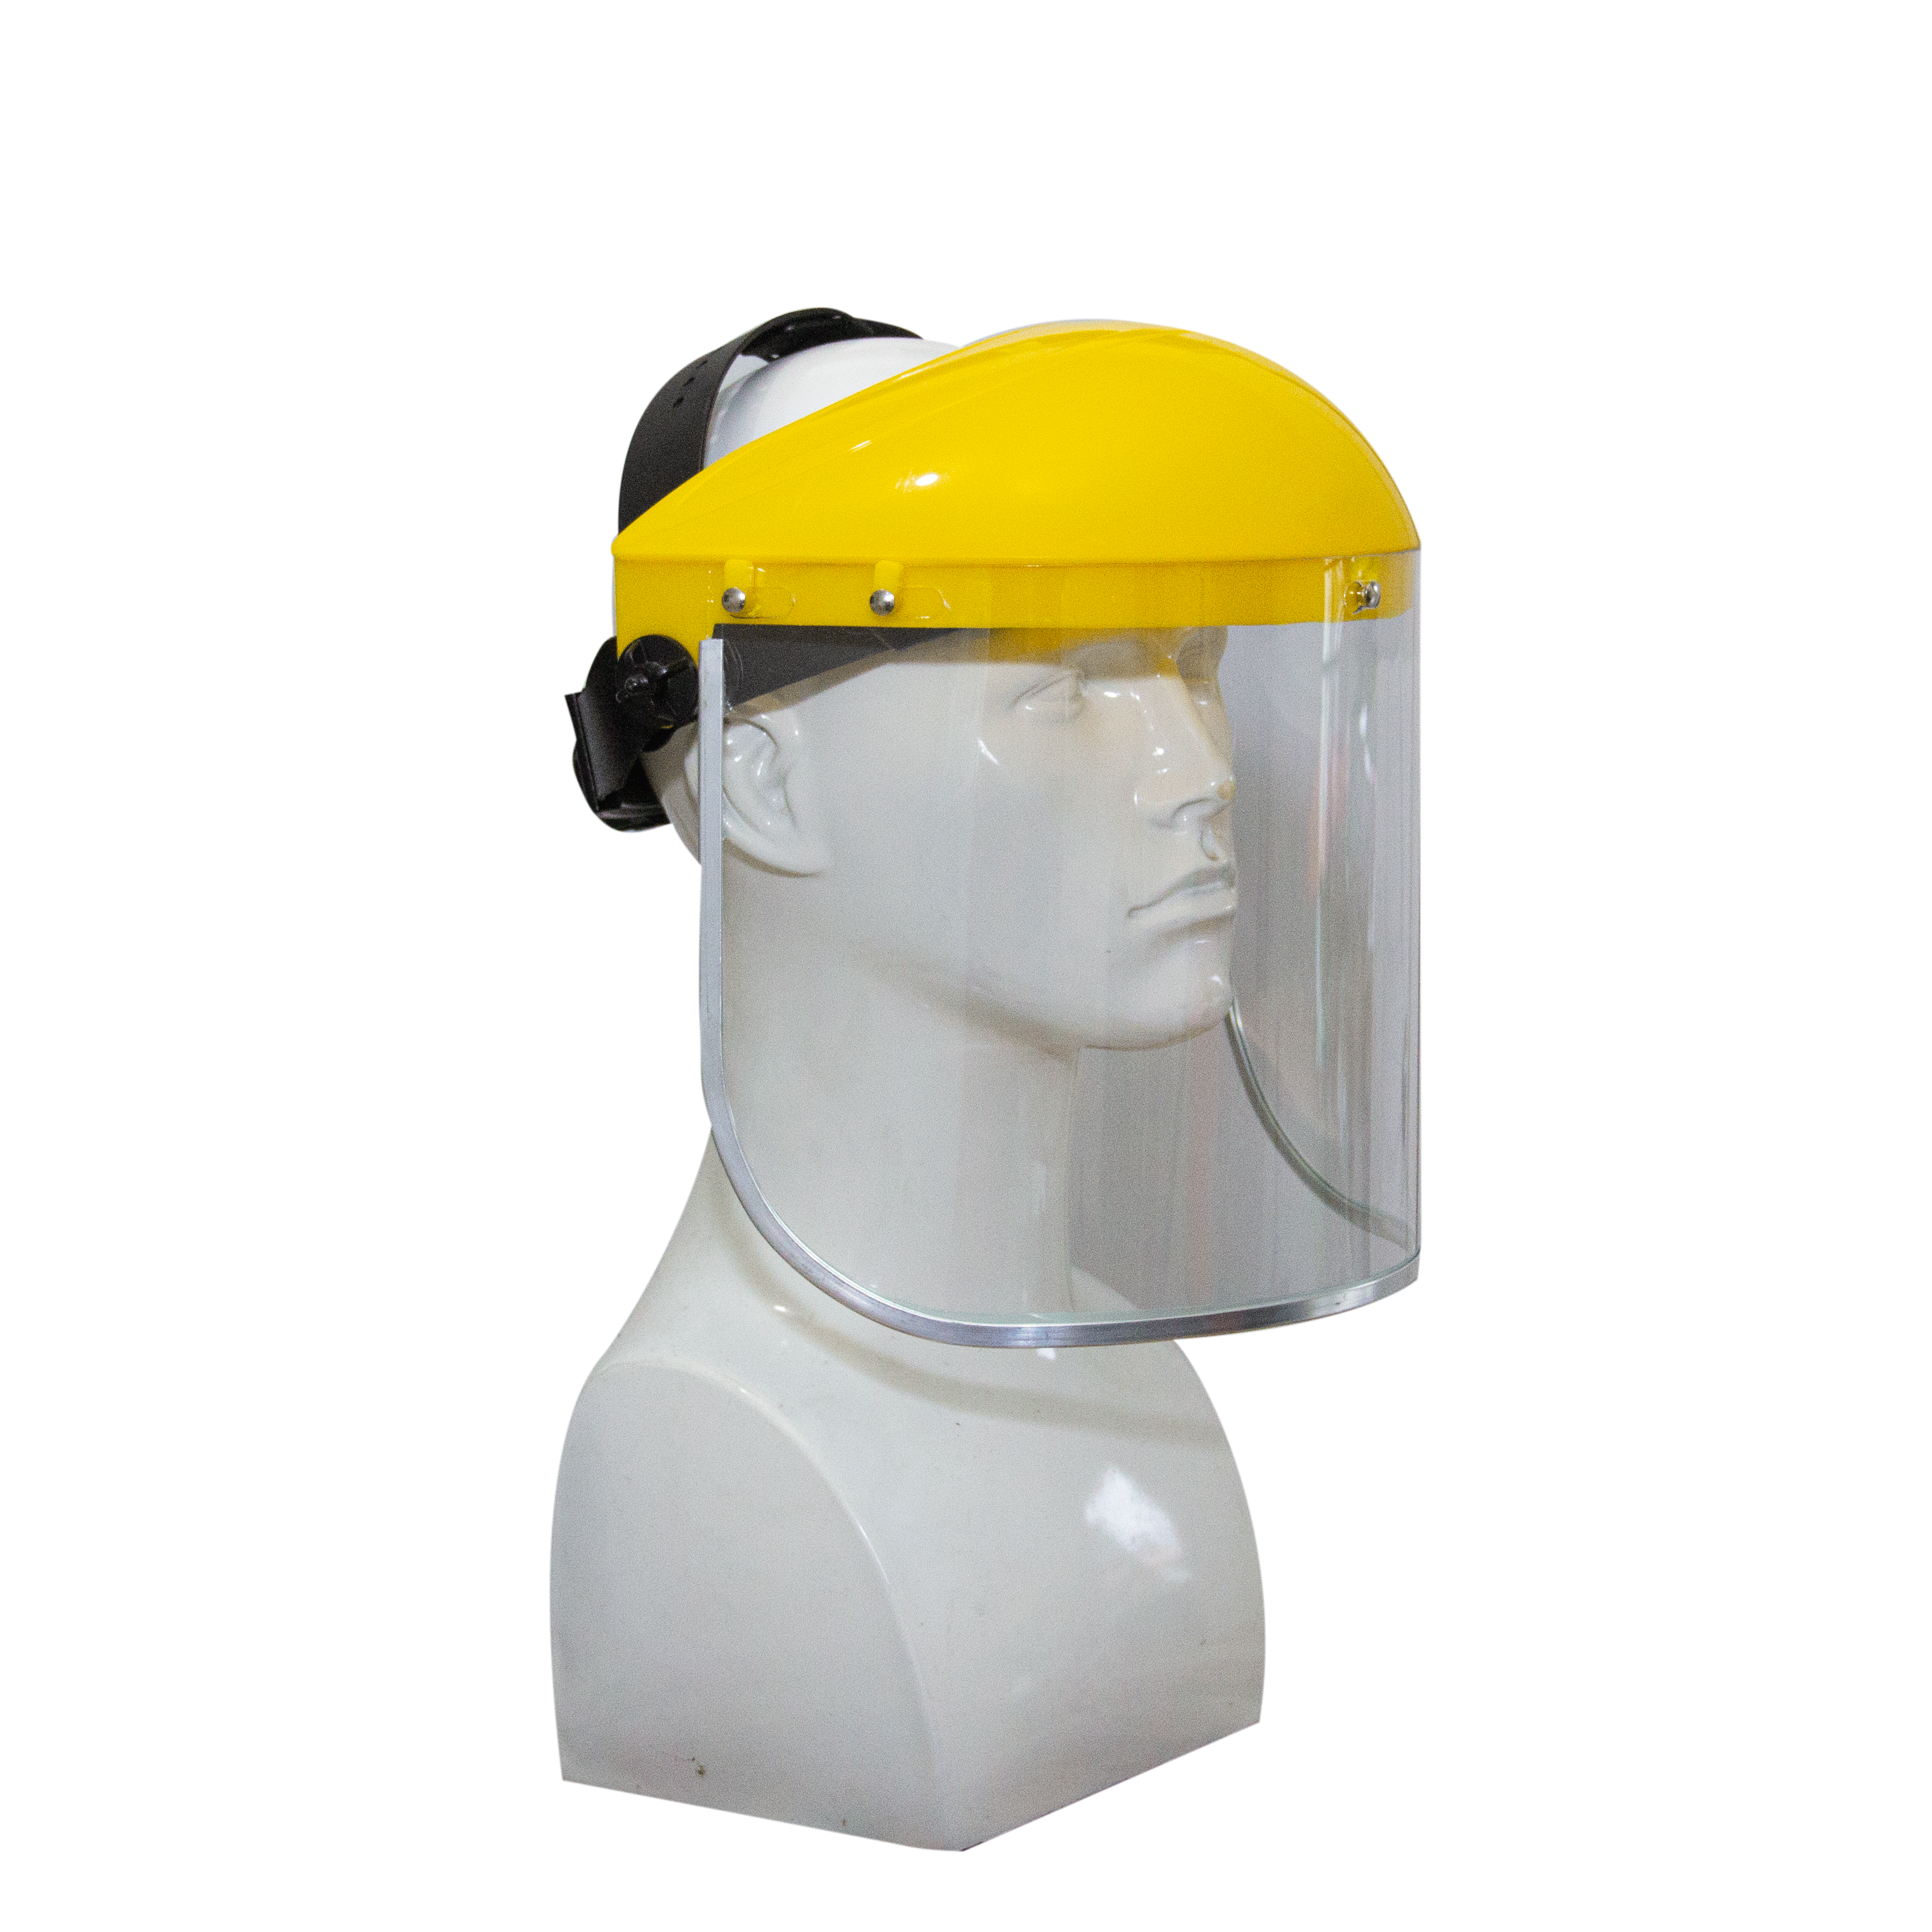 Facial Shield TP-304